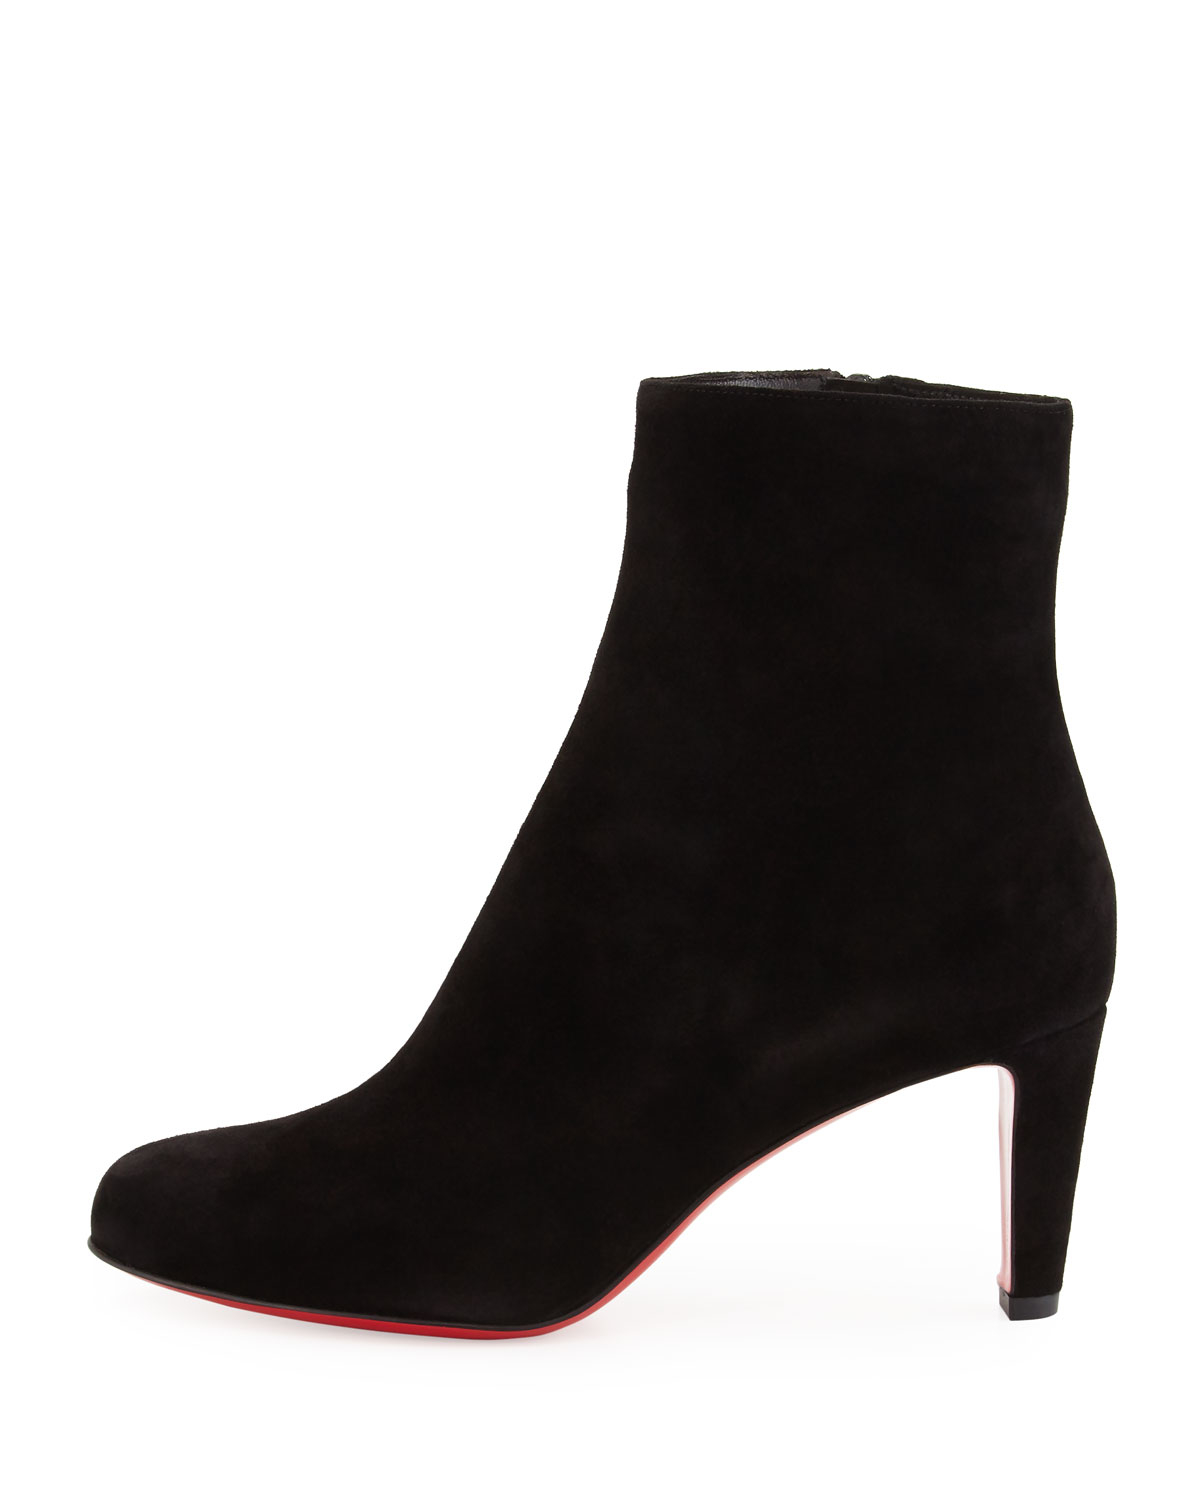 louis vuitton shoes for men - christian louboutin round-toe boots Black suede | cosmetics ...